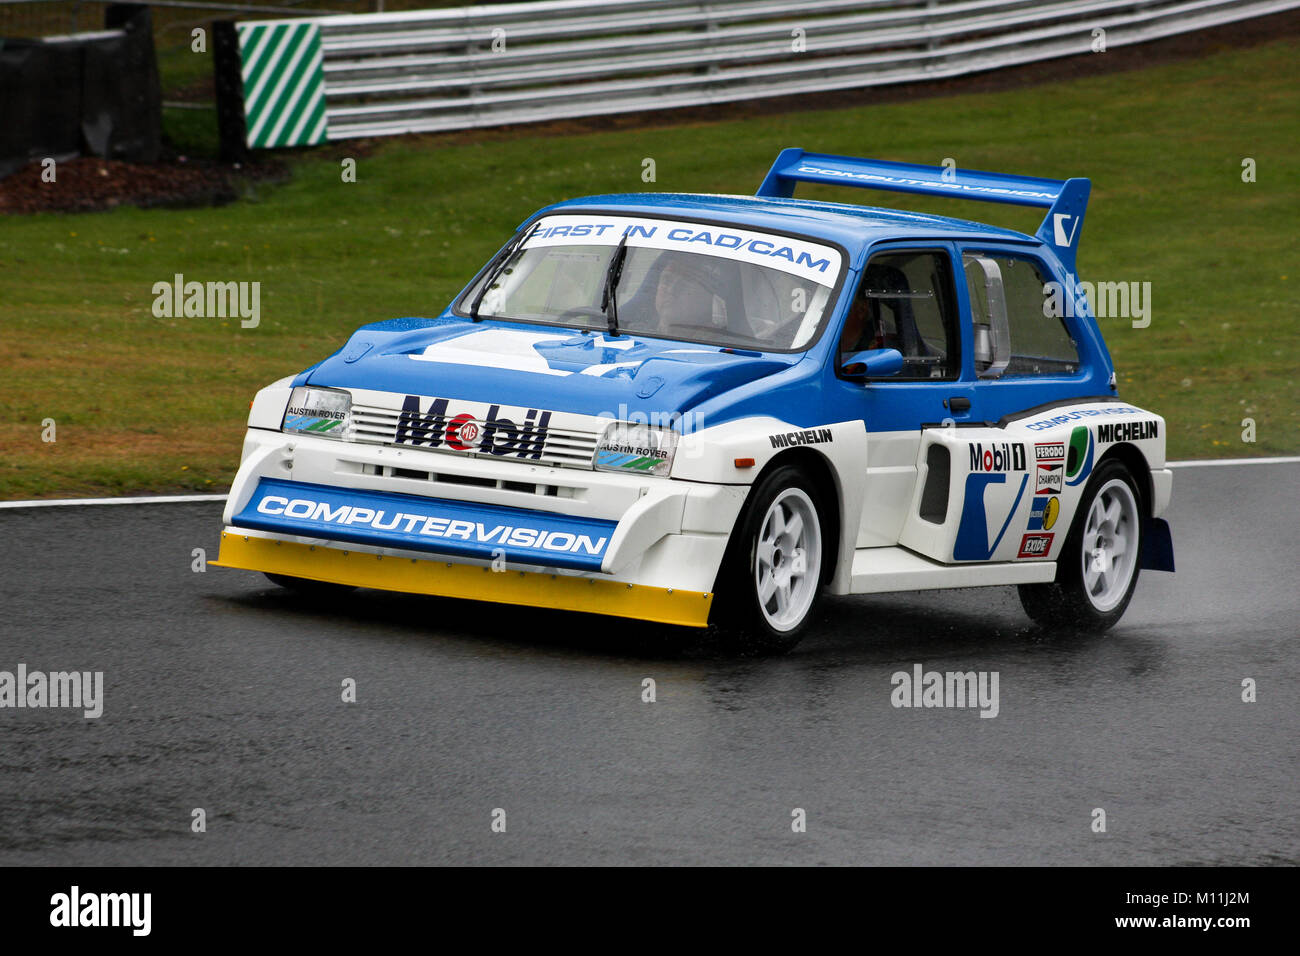 MG Metro 6R4 Group B rally car Stock Photo